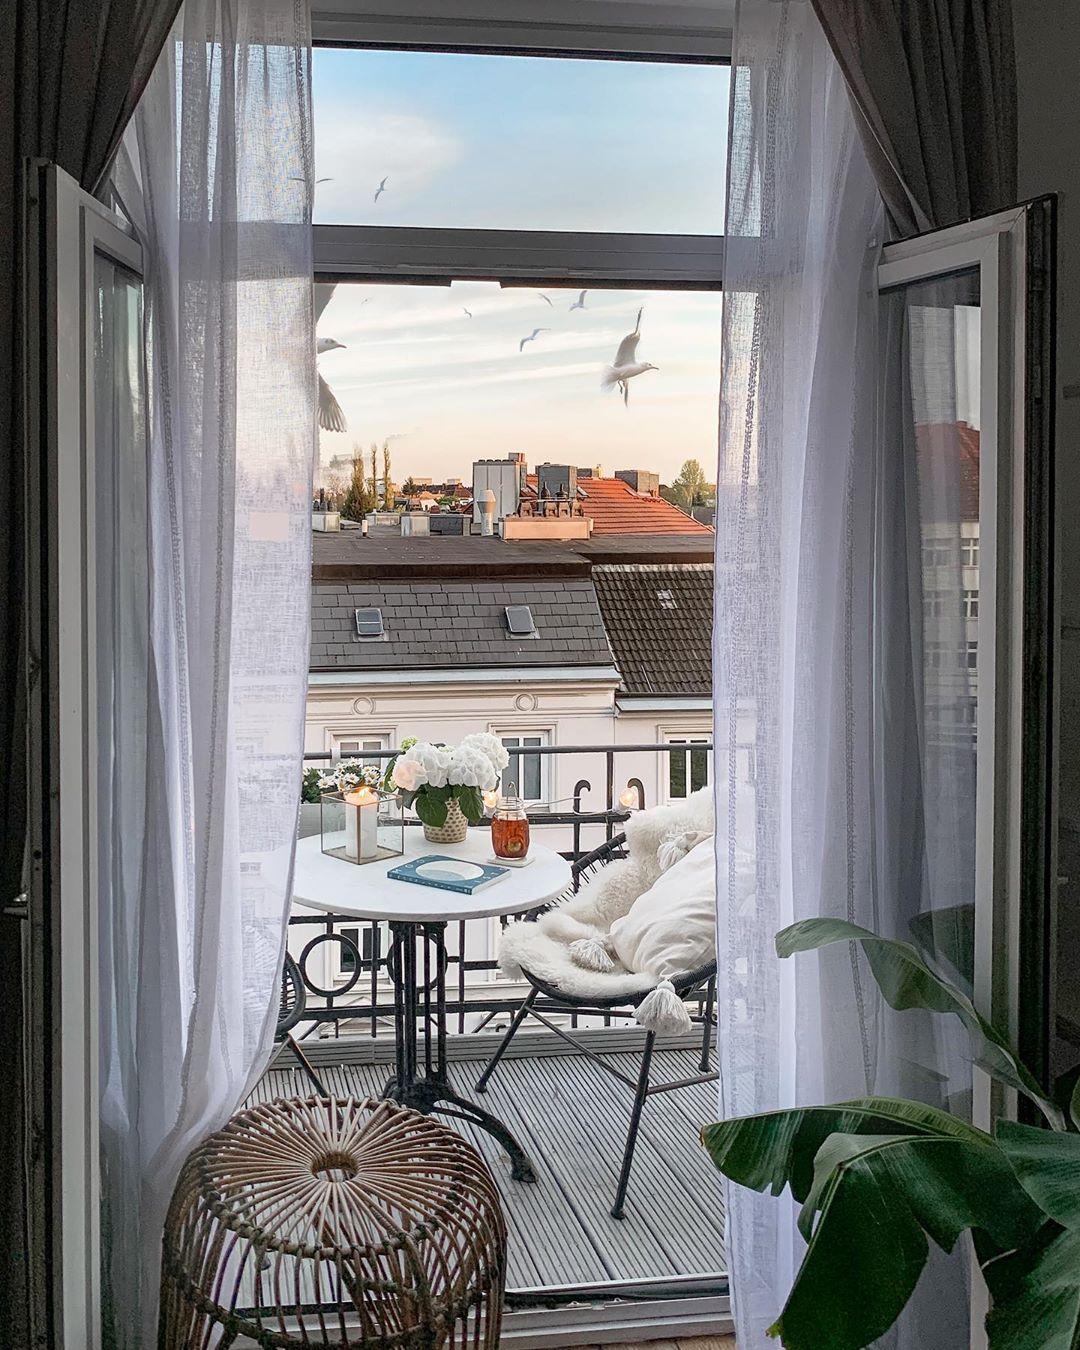 Rise and shine 🕊✨

#balkon  #balkonien #balkondeko #hocker #stuhl #vintage #hortenien #blumen #frühling #blumenliebe